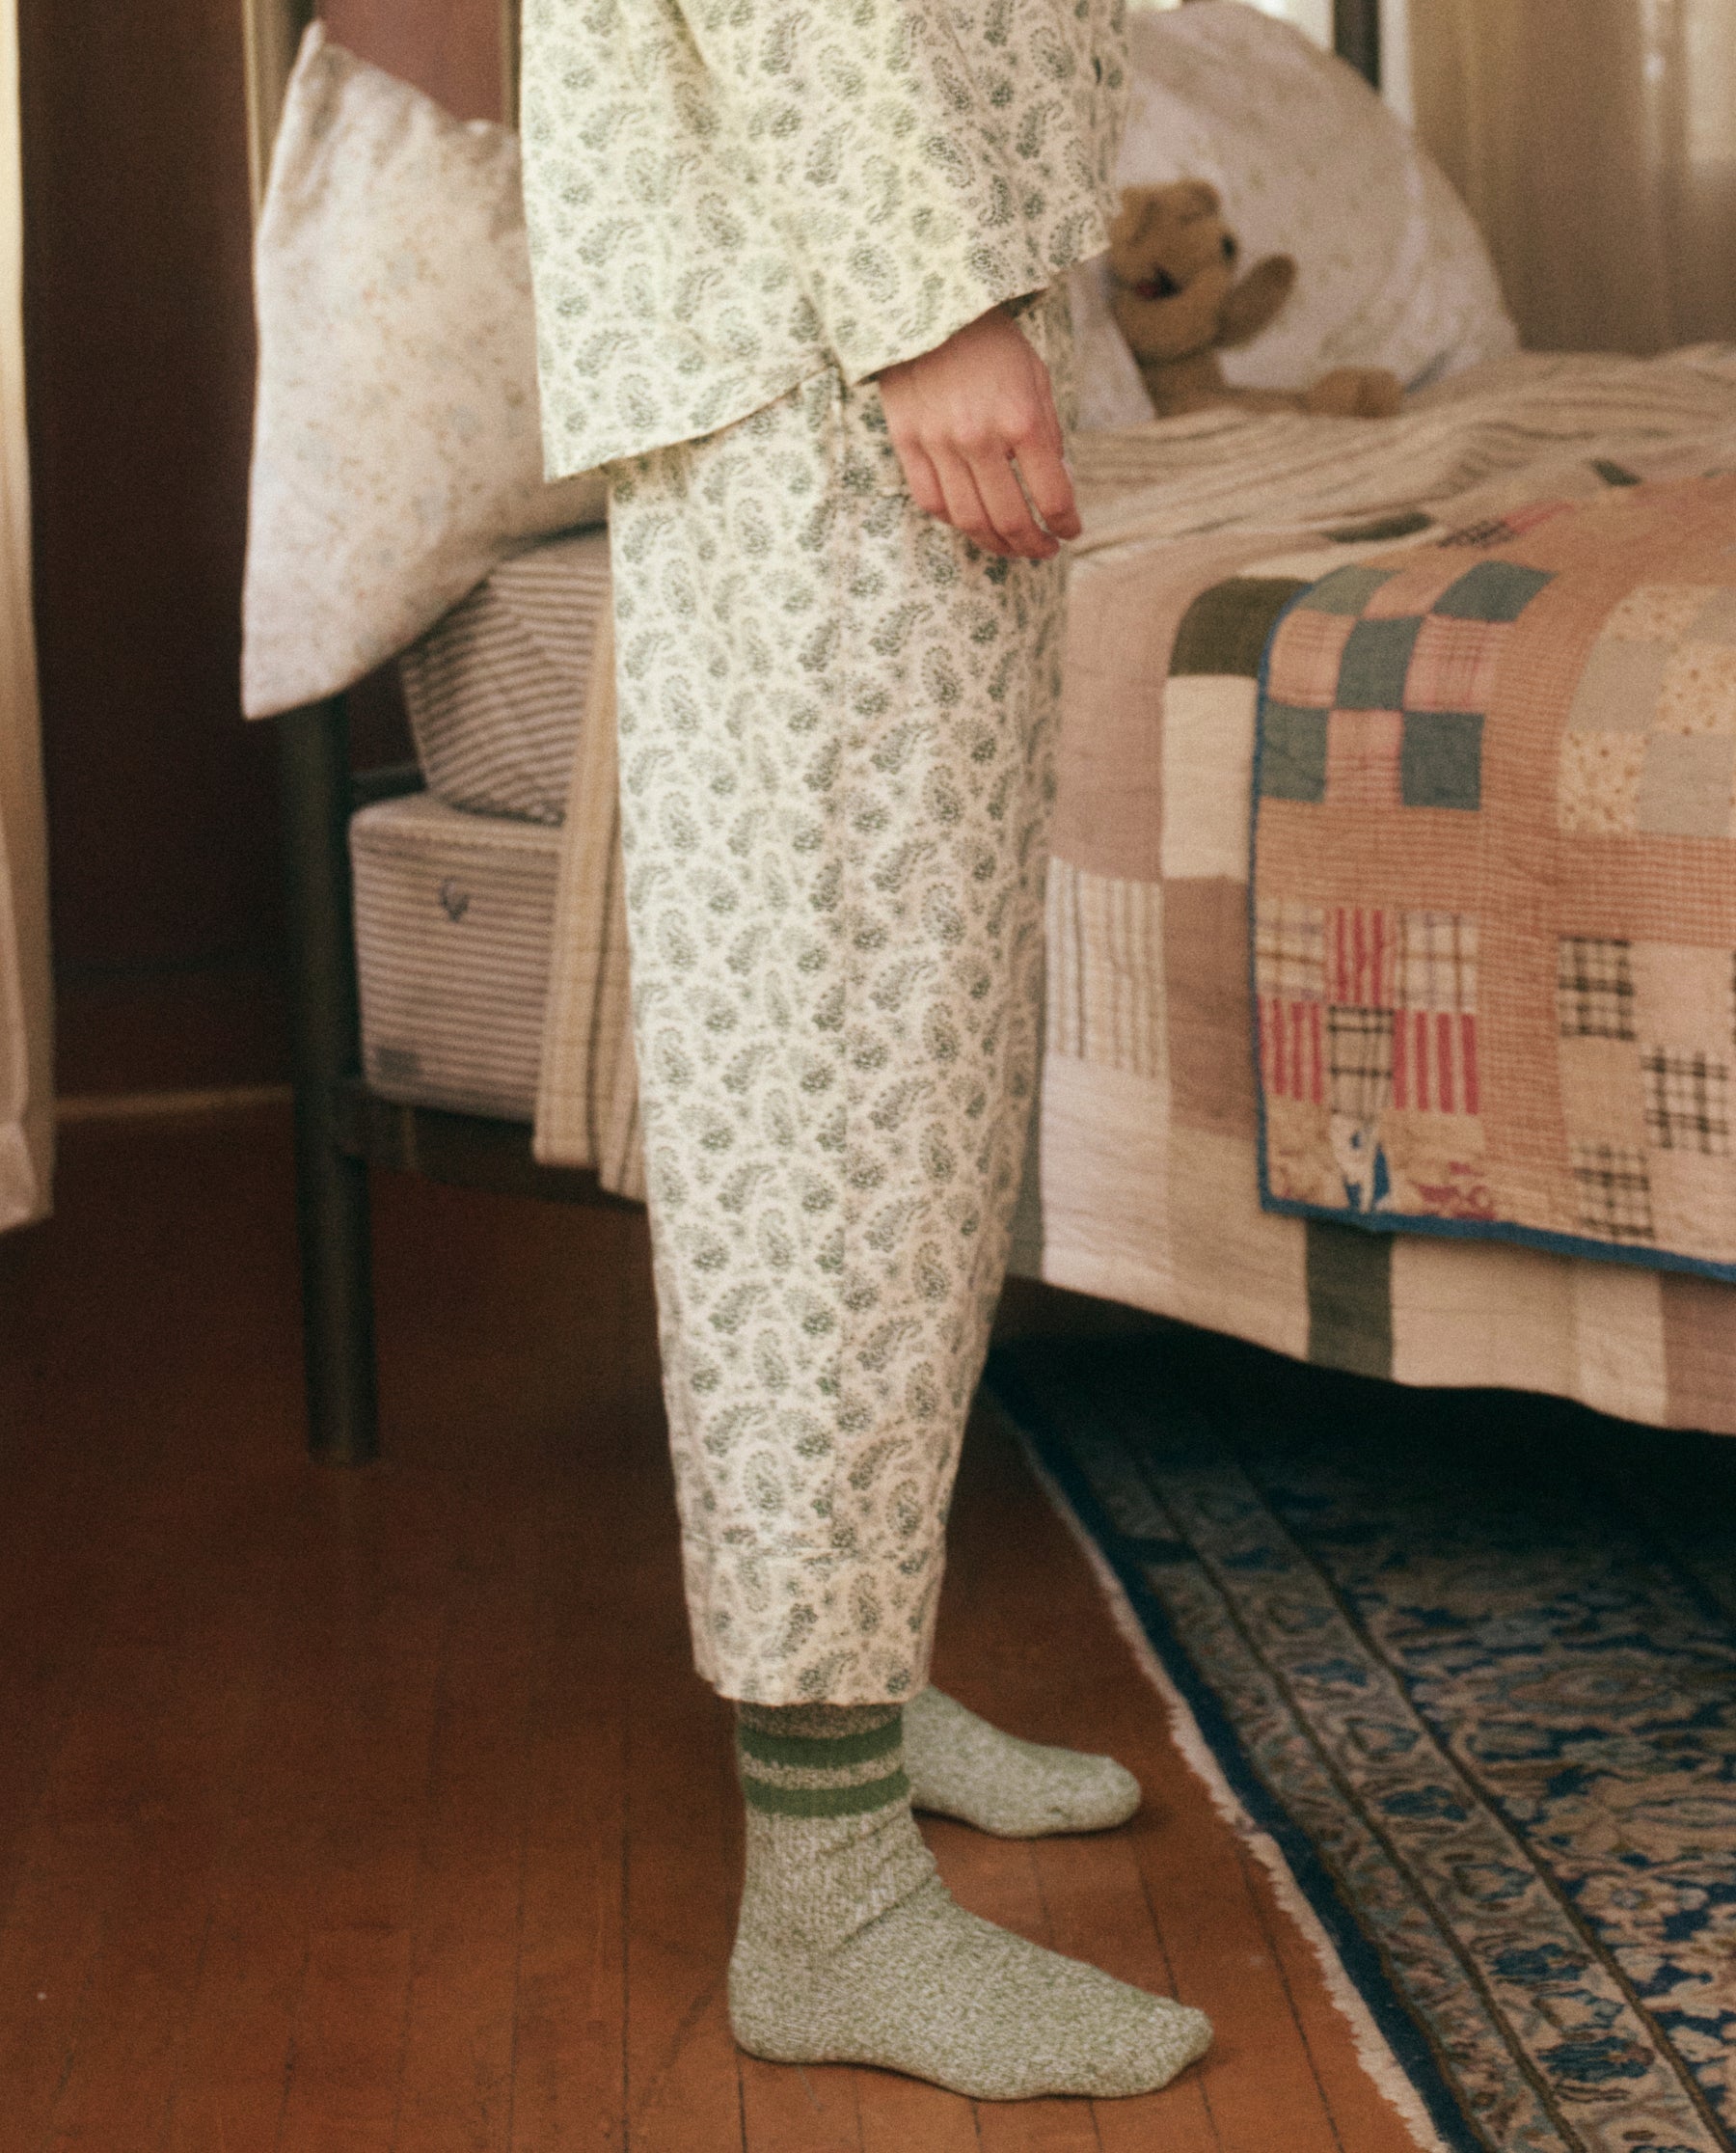 The Pajama Pant. -- Washed White with Pine Vintage Paisley SLEEP BOTTOM THE GREAT. HOL 23 SLEEP SALE